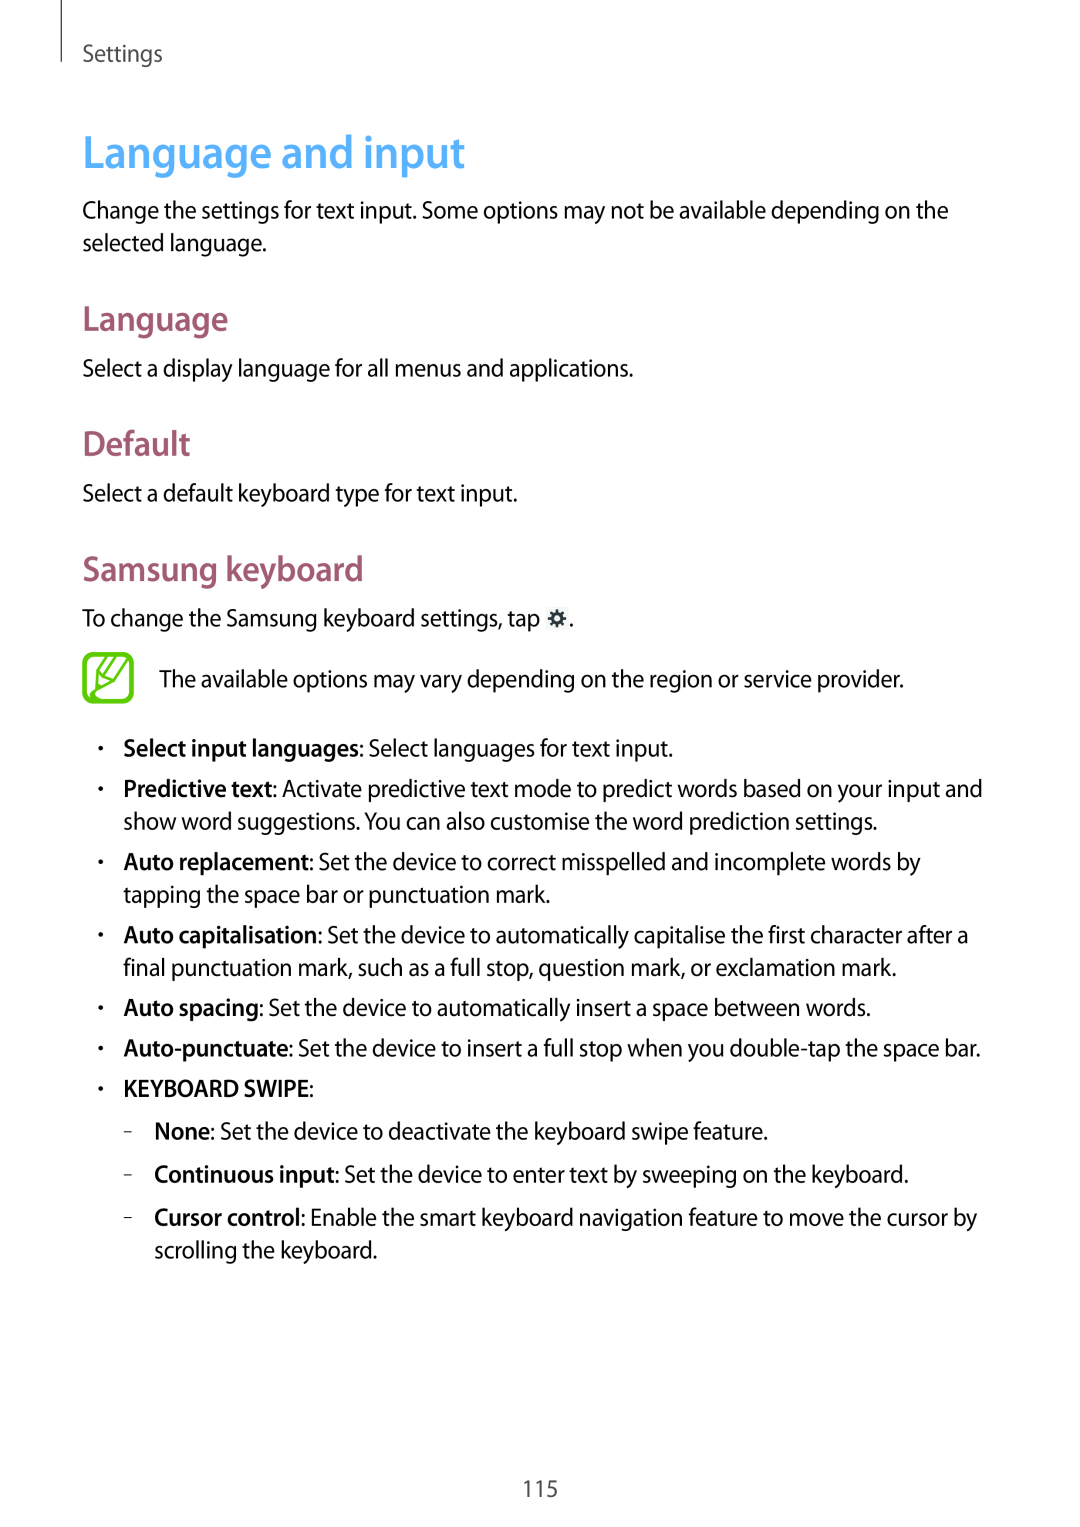 Samsung GT-N8000ZWAPHE, GT-N8000ZWAVD2 manual Language and input, Default, Samsung keyboard, Keyboard Swipe, Settings 